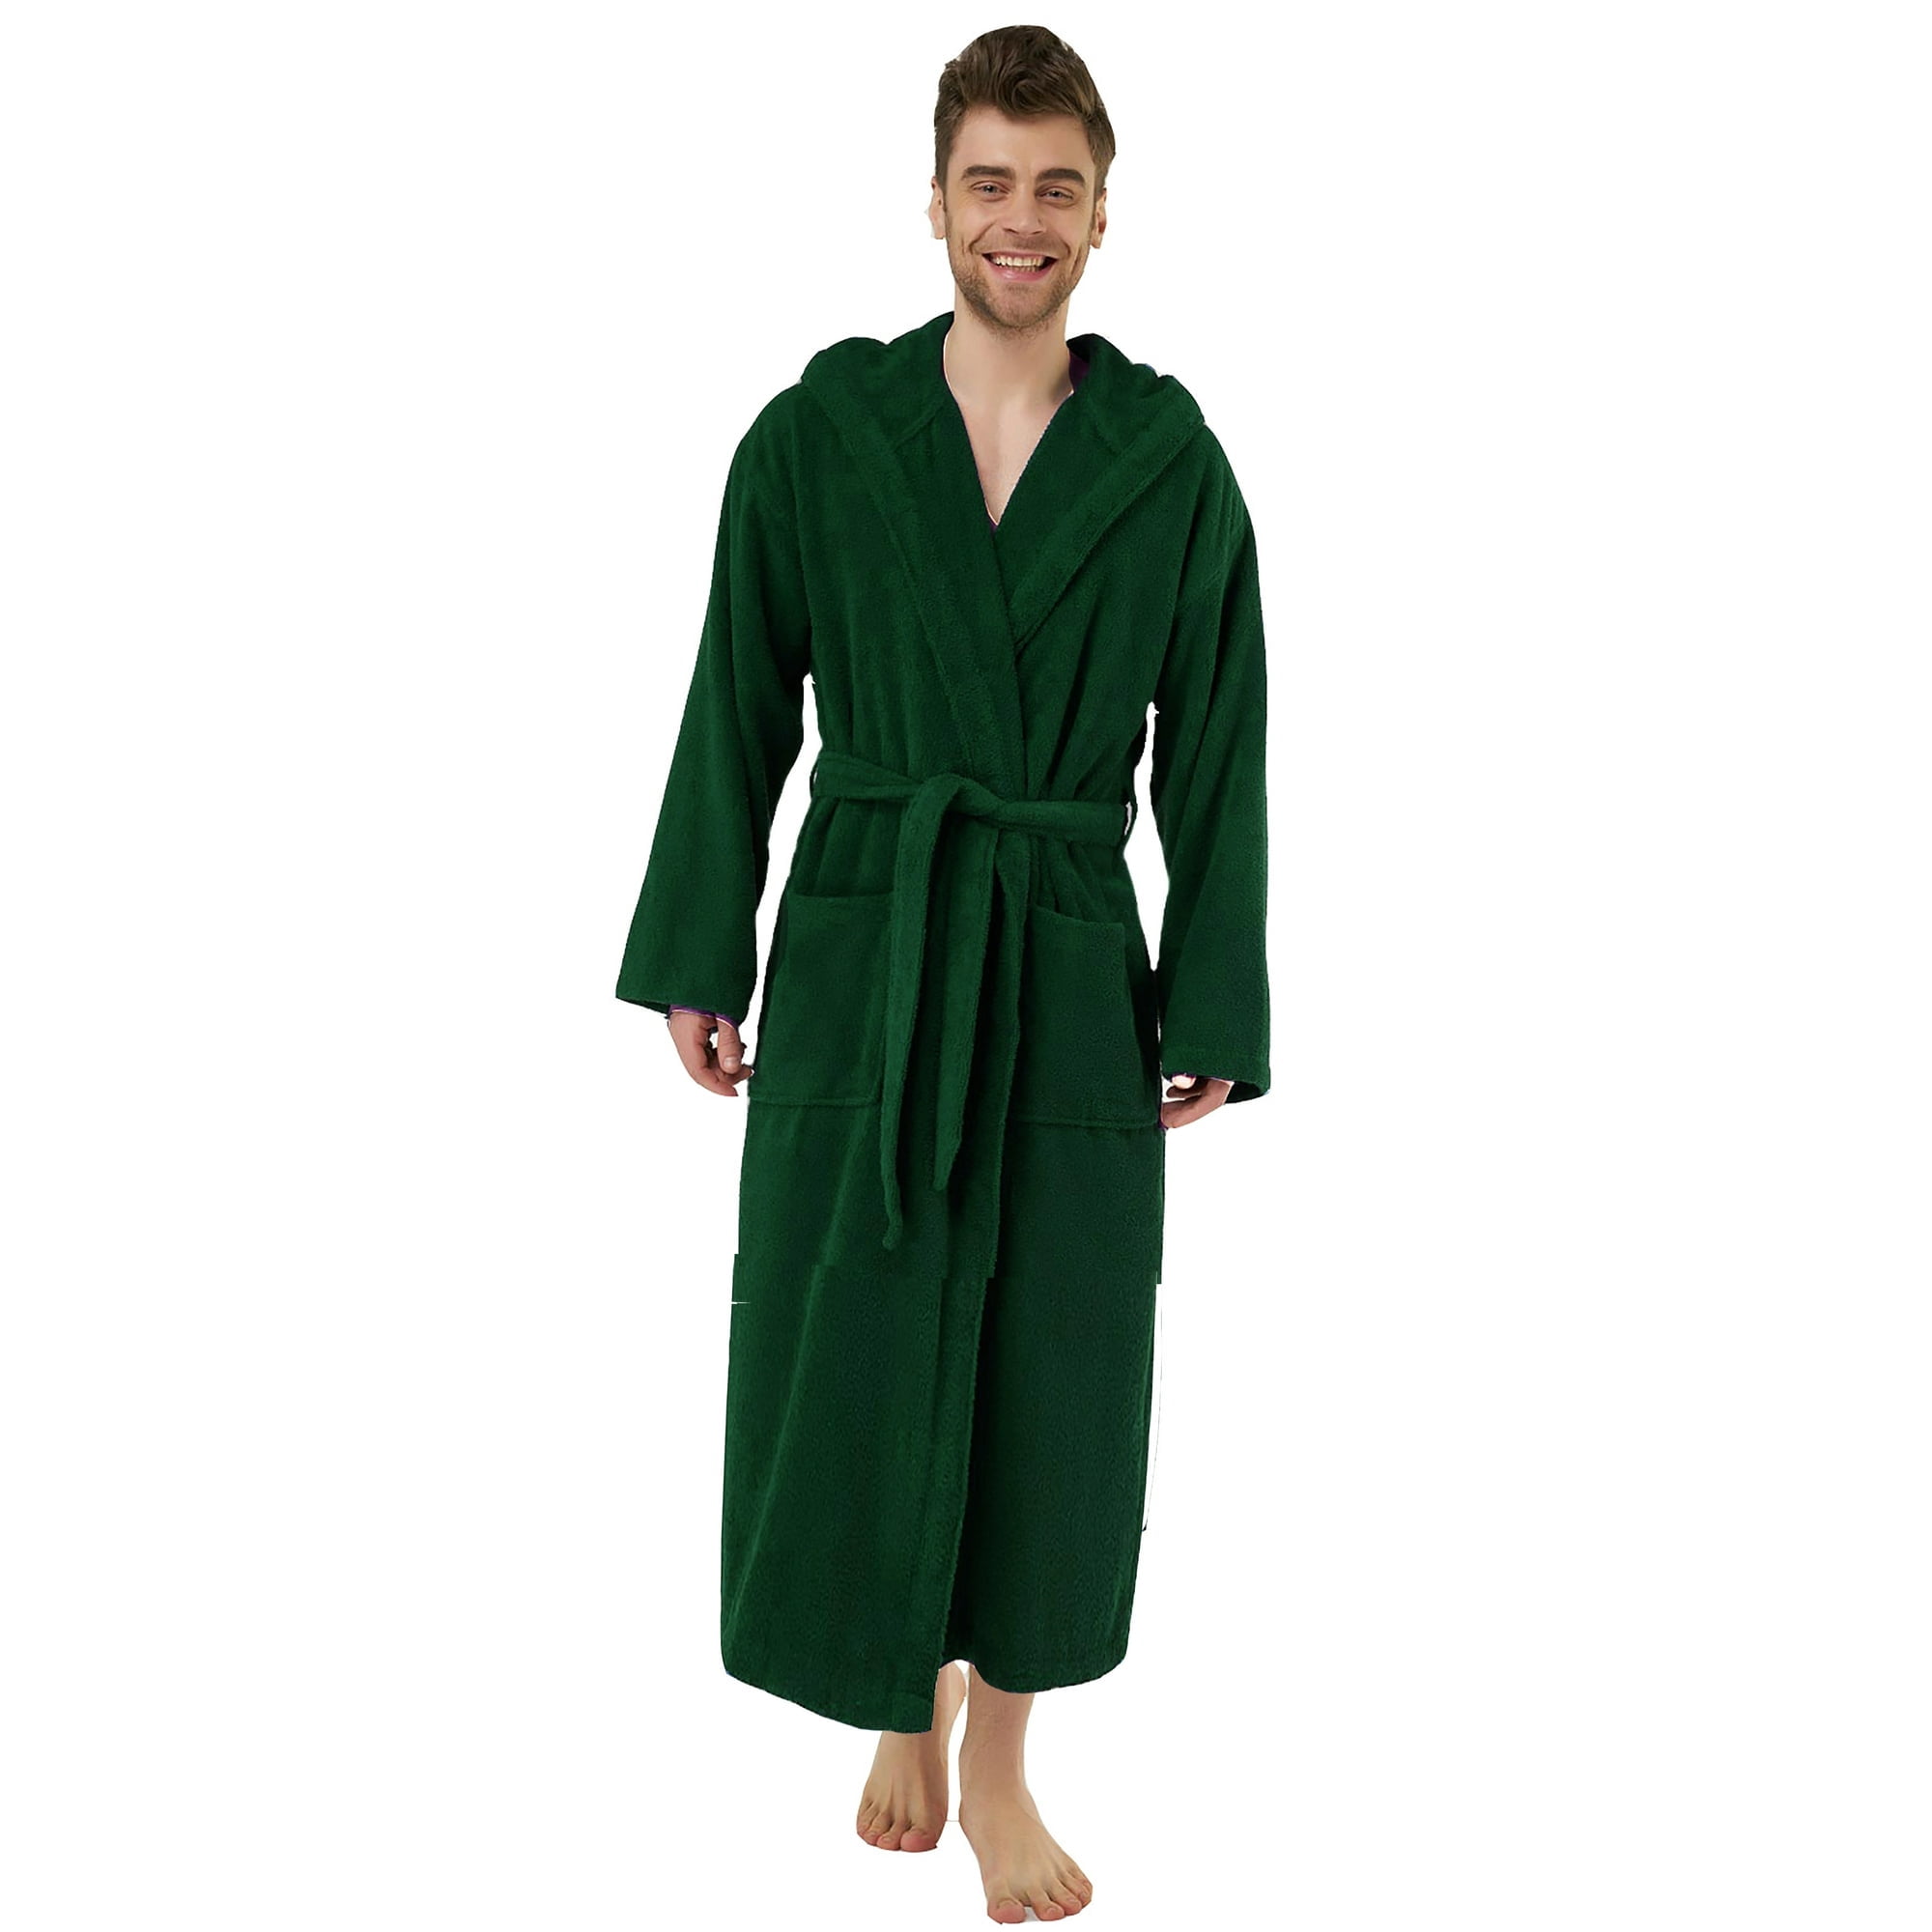 Hunter Green Hooded Bathrobe for Men. Adult XL, 51 inch Length. Spa ...